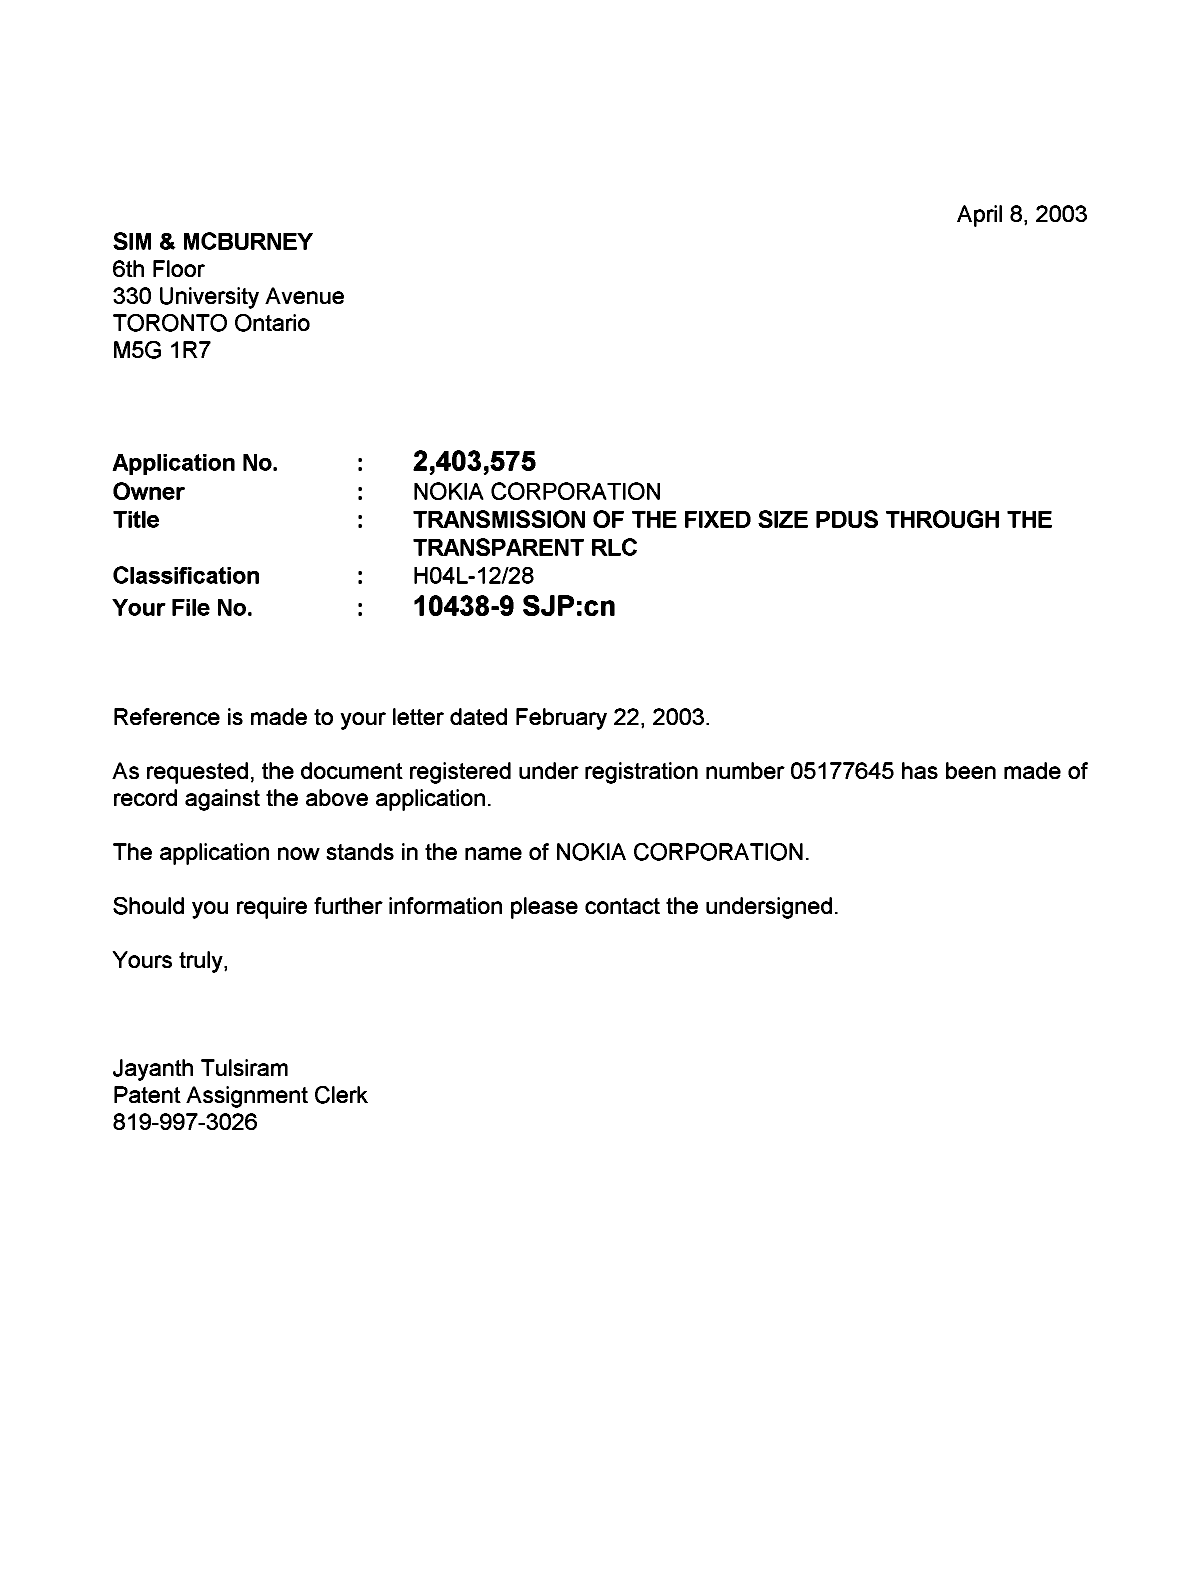 Canadian Patent Document 2403575. Correspondence 20030408. Image 1 of 1